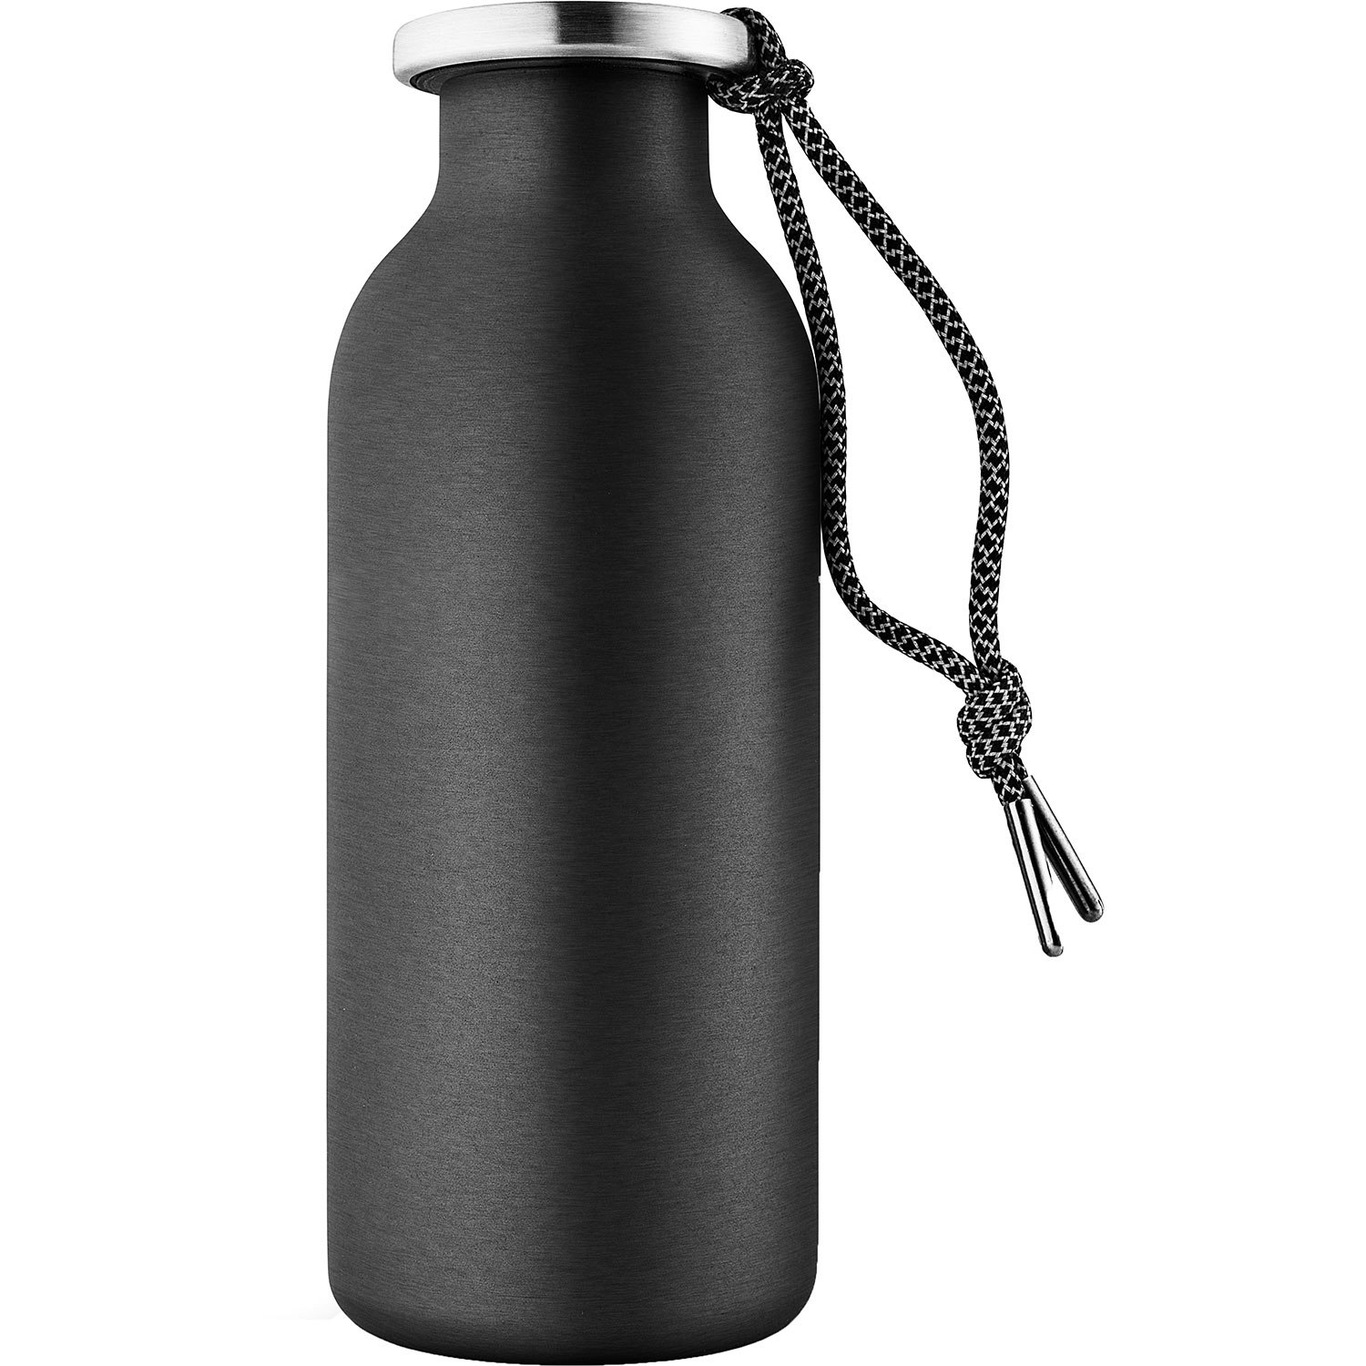 https://royaldesign.com/image/2/eva-solo-24-12-to-go-thermos-bottle-1?w=800&quality=80